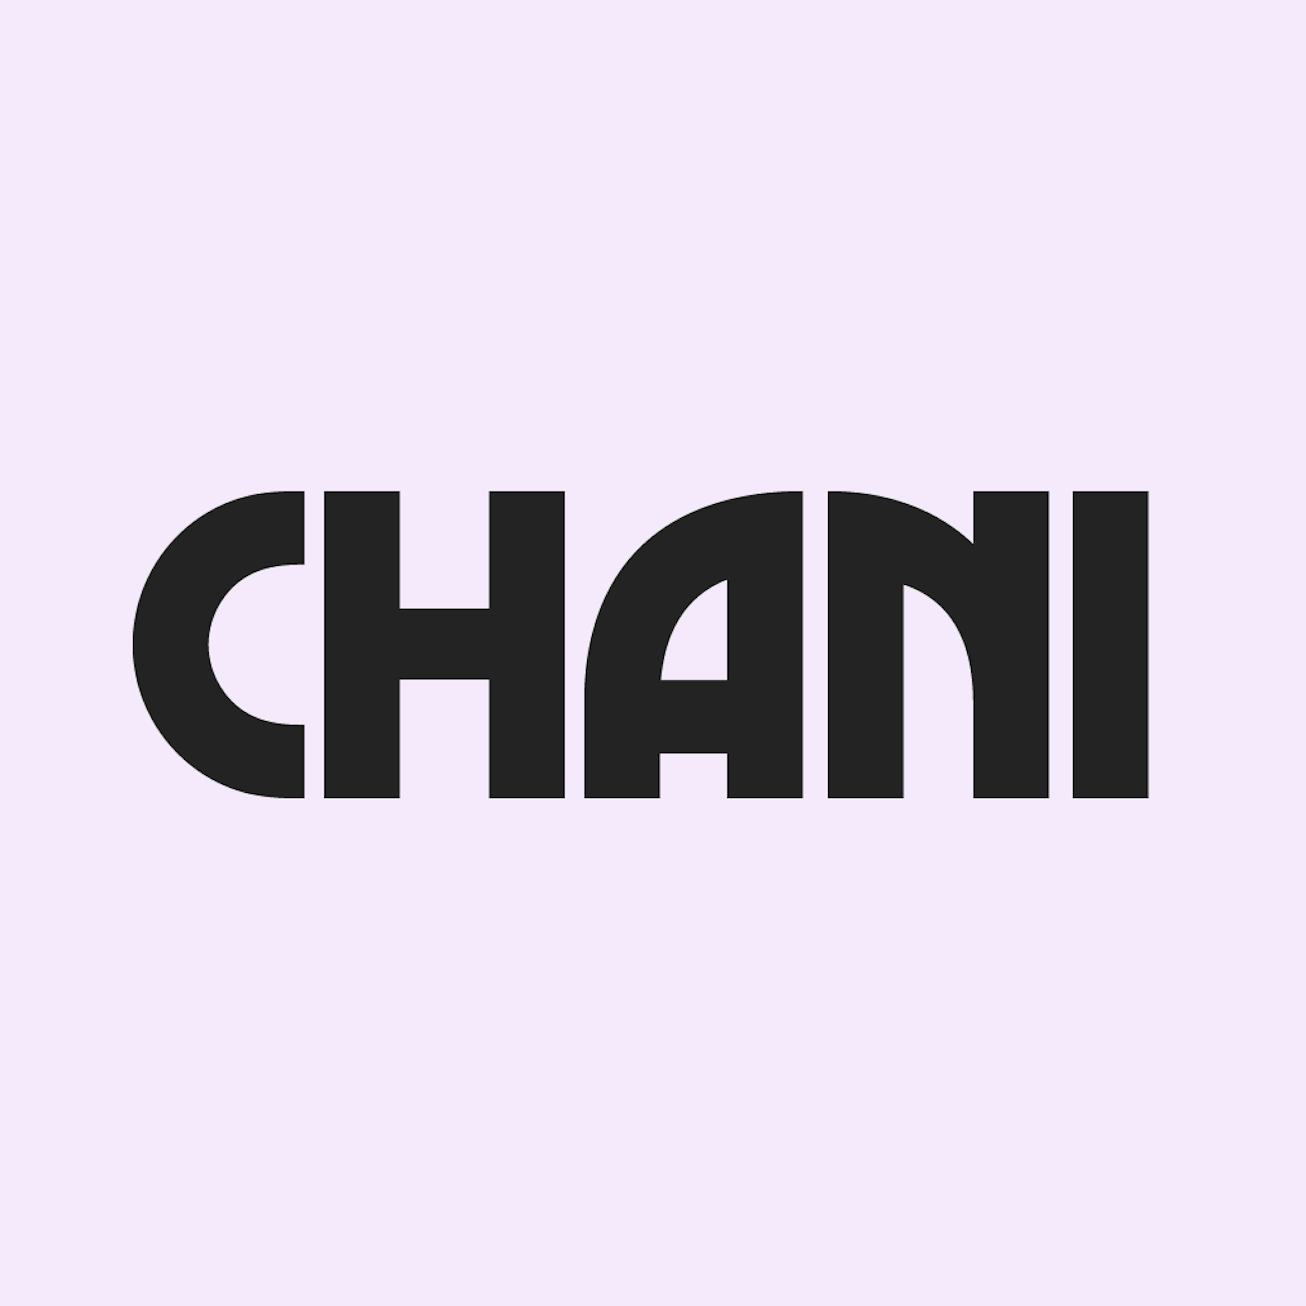 The Chani app logo